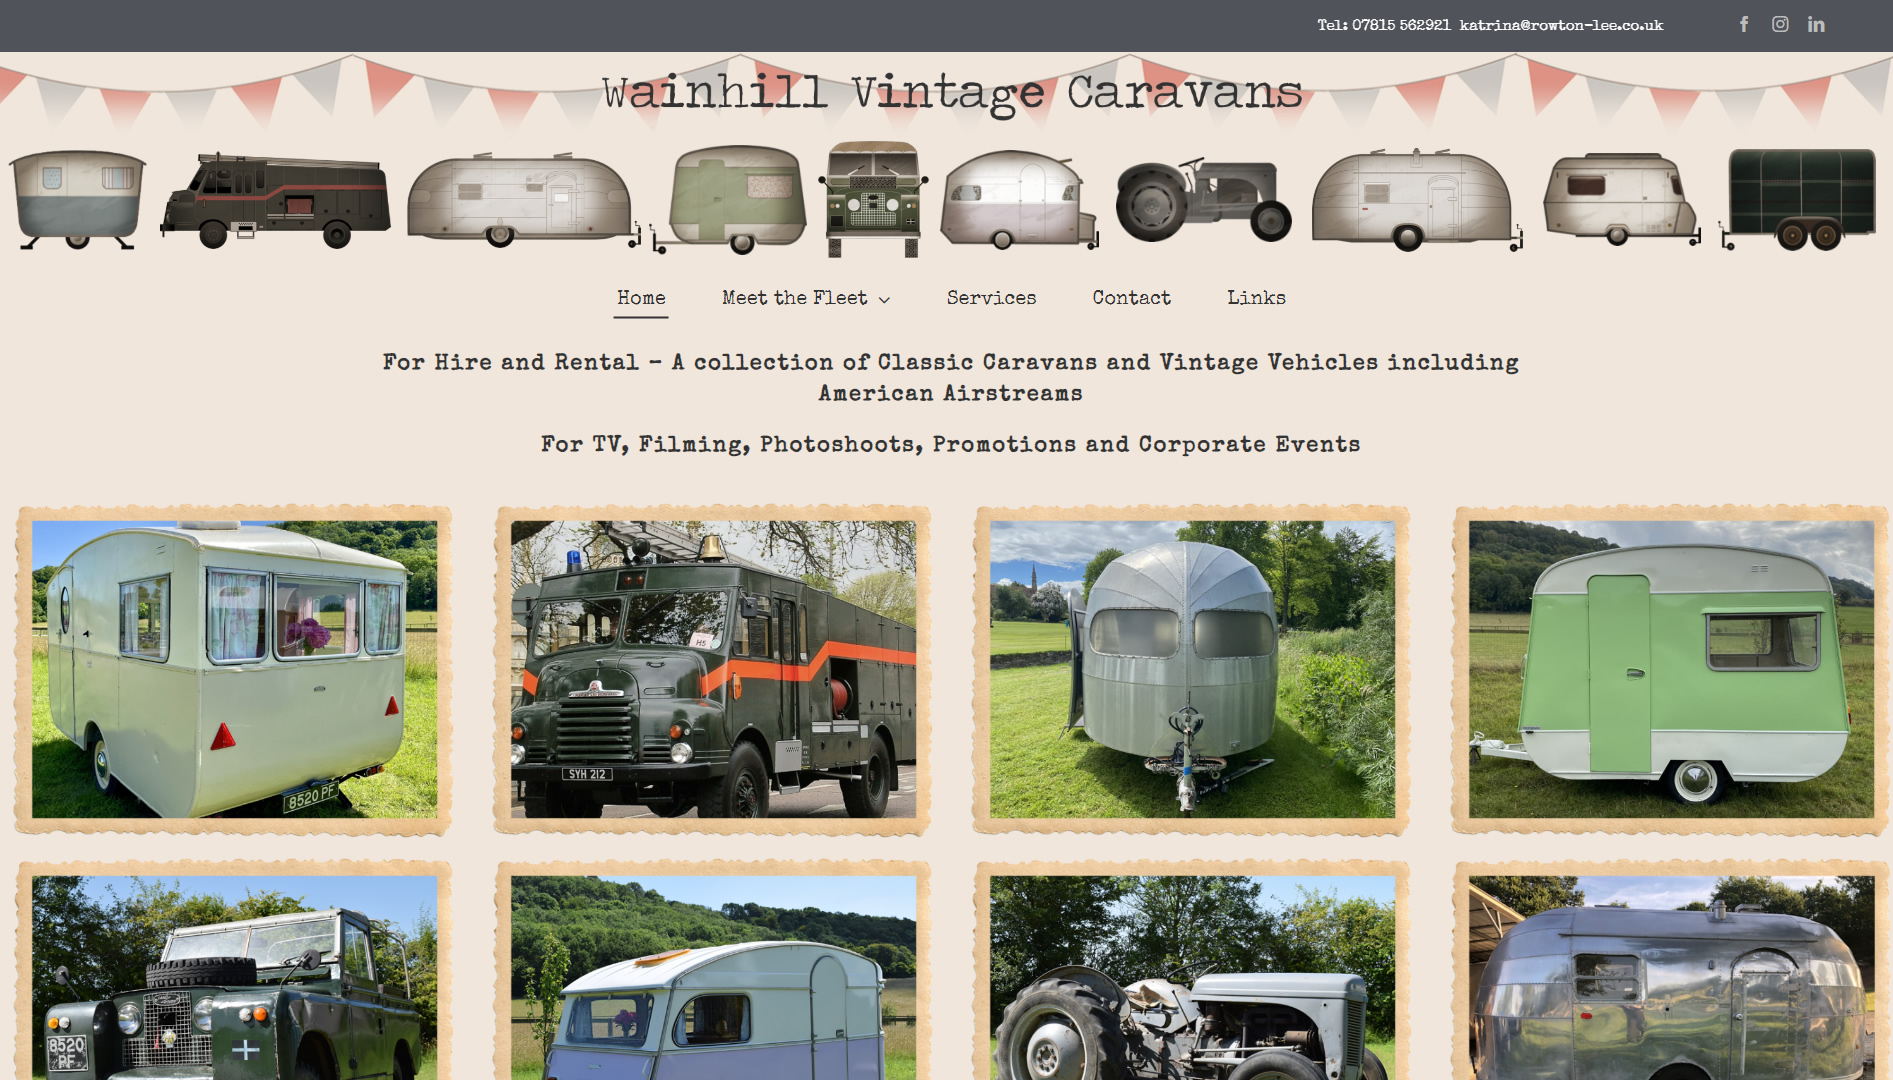 Wainhill Vintage Caravans